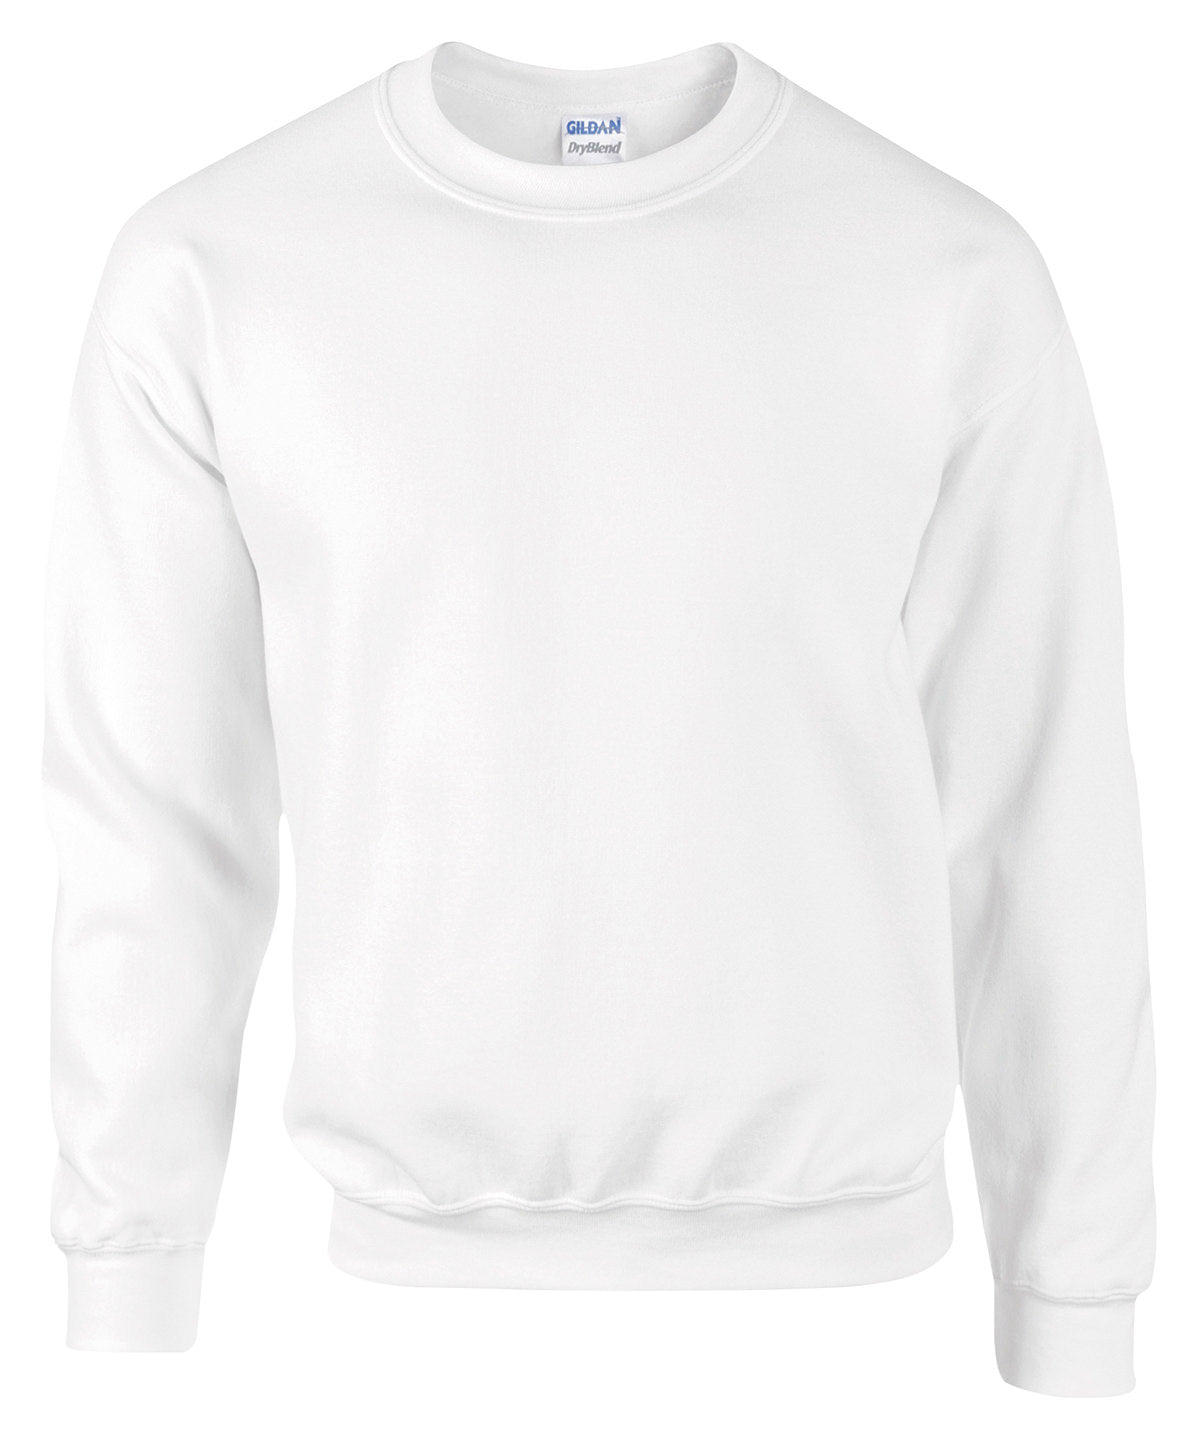 Personalised Sweatshirts - Black Gildan DryBlend® adult crew neck sweatshirt